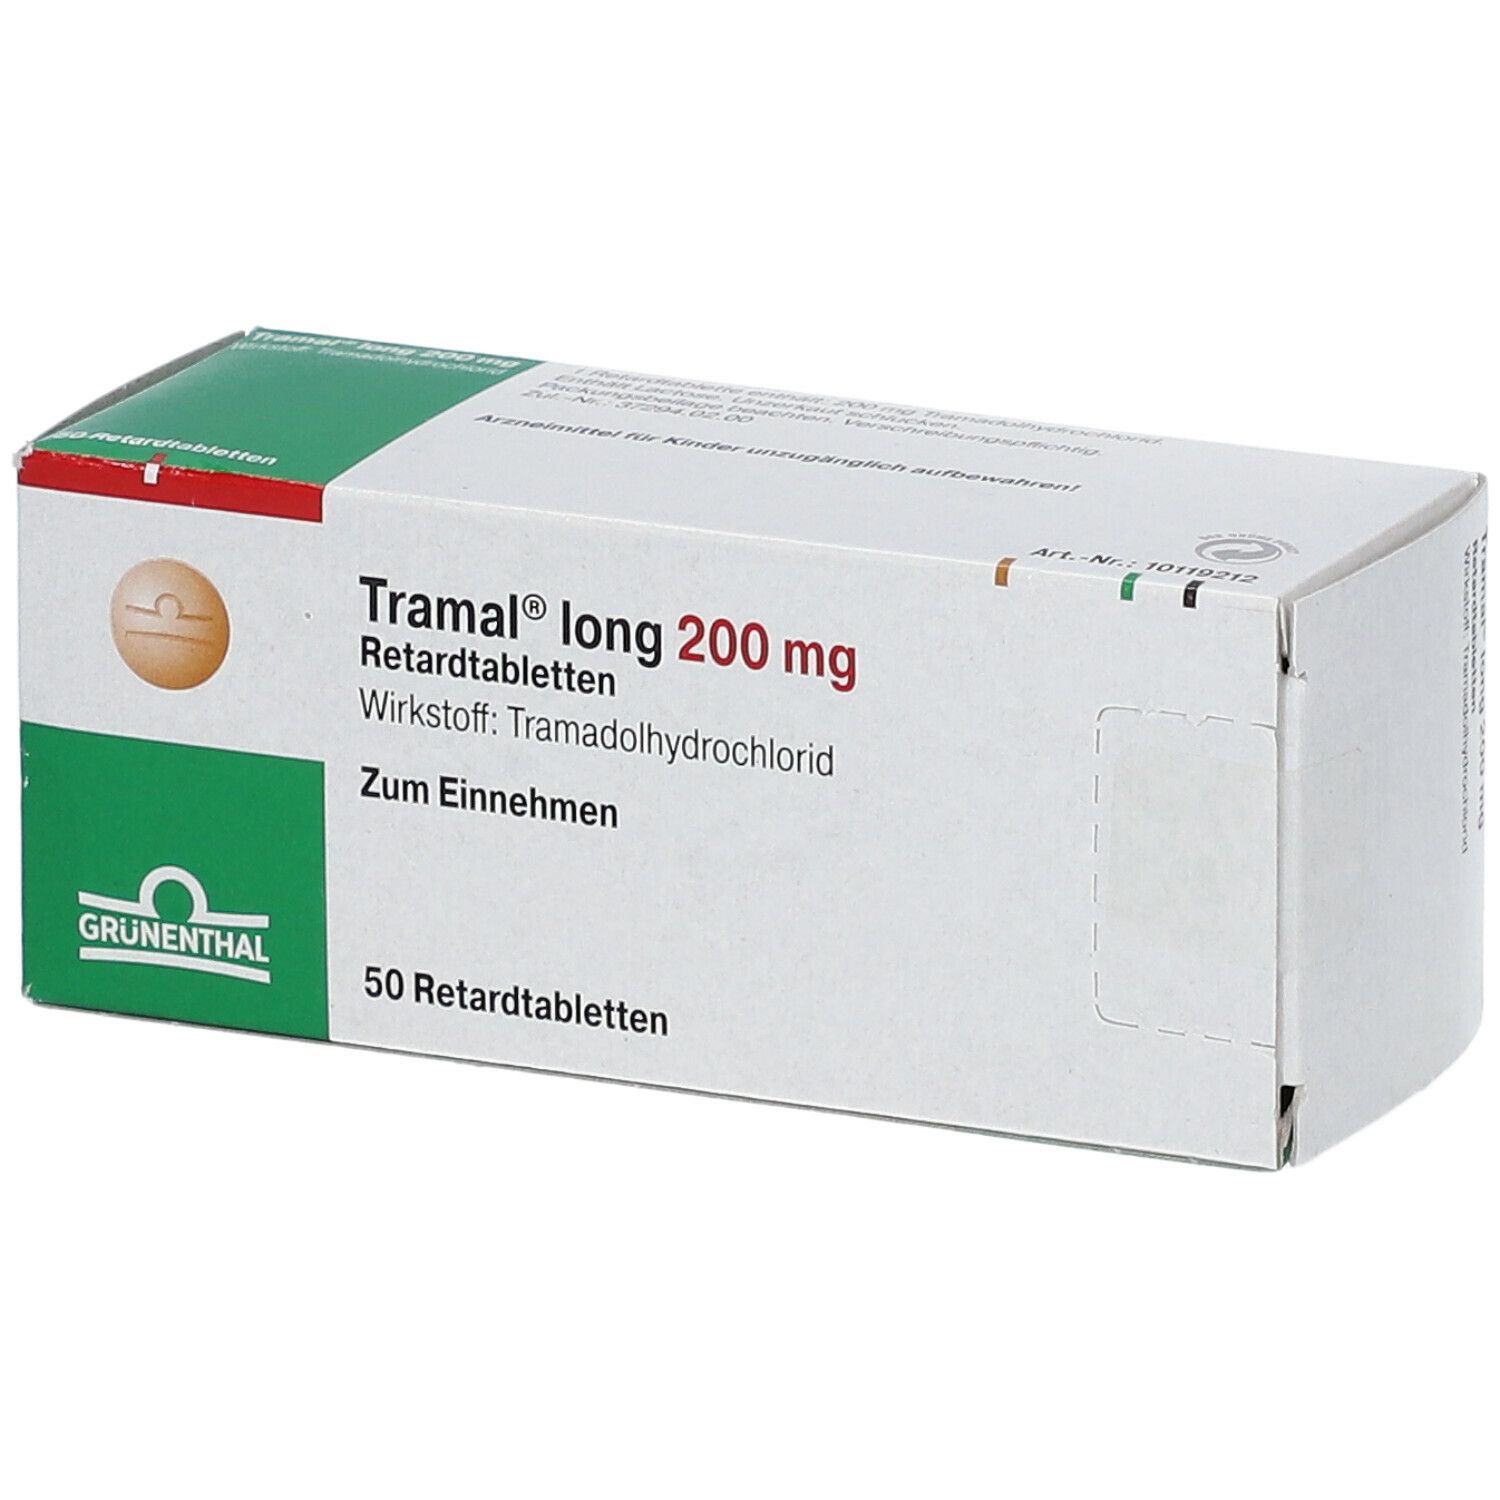 Tramal® long 200 mg